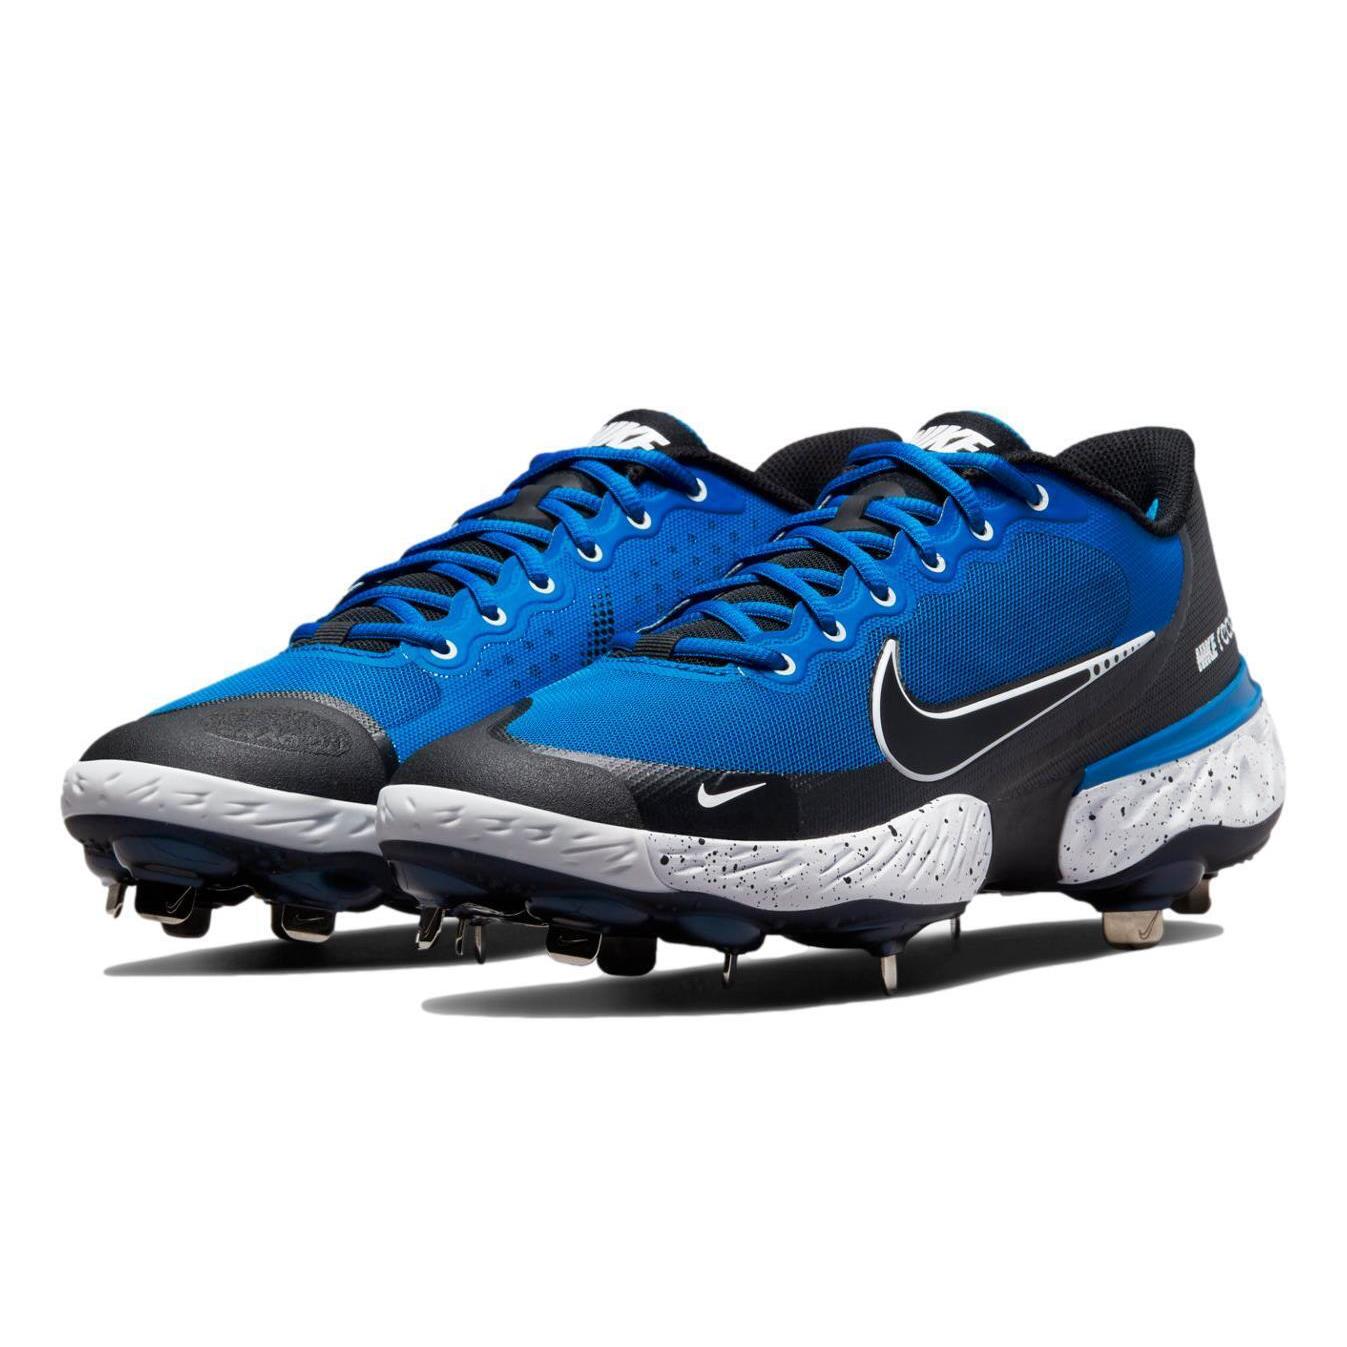 Nike Alpha Huarache Elite 3 Low Baseball Cleats Shoes `game Royal` CK0746-402 - Blue